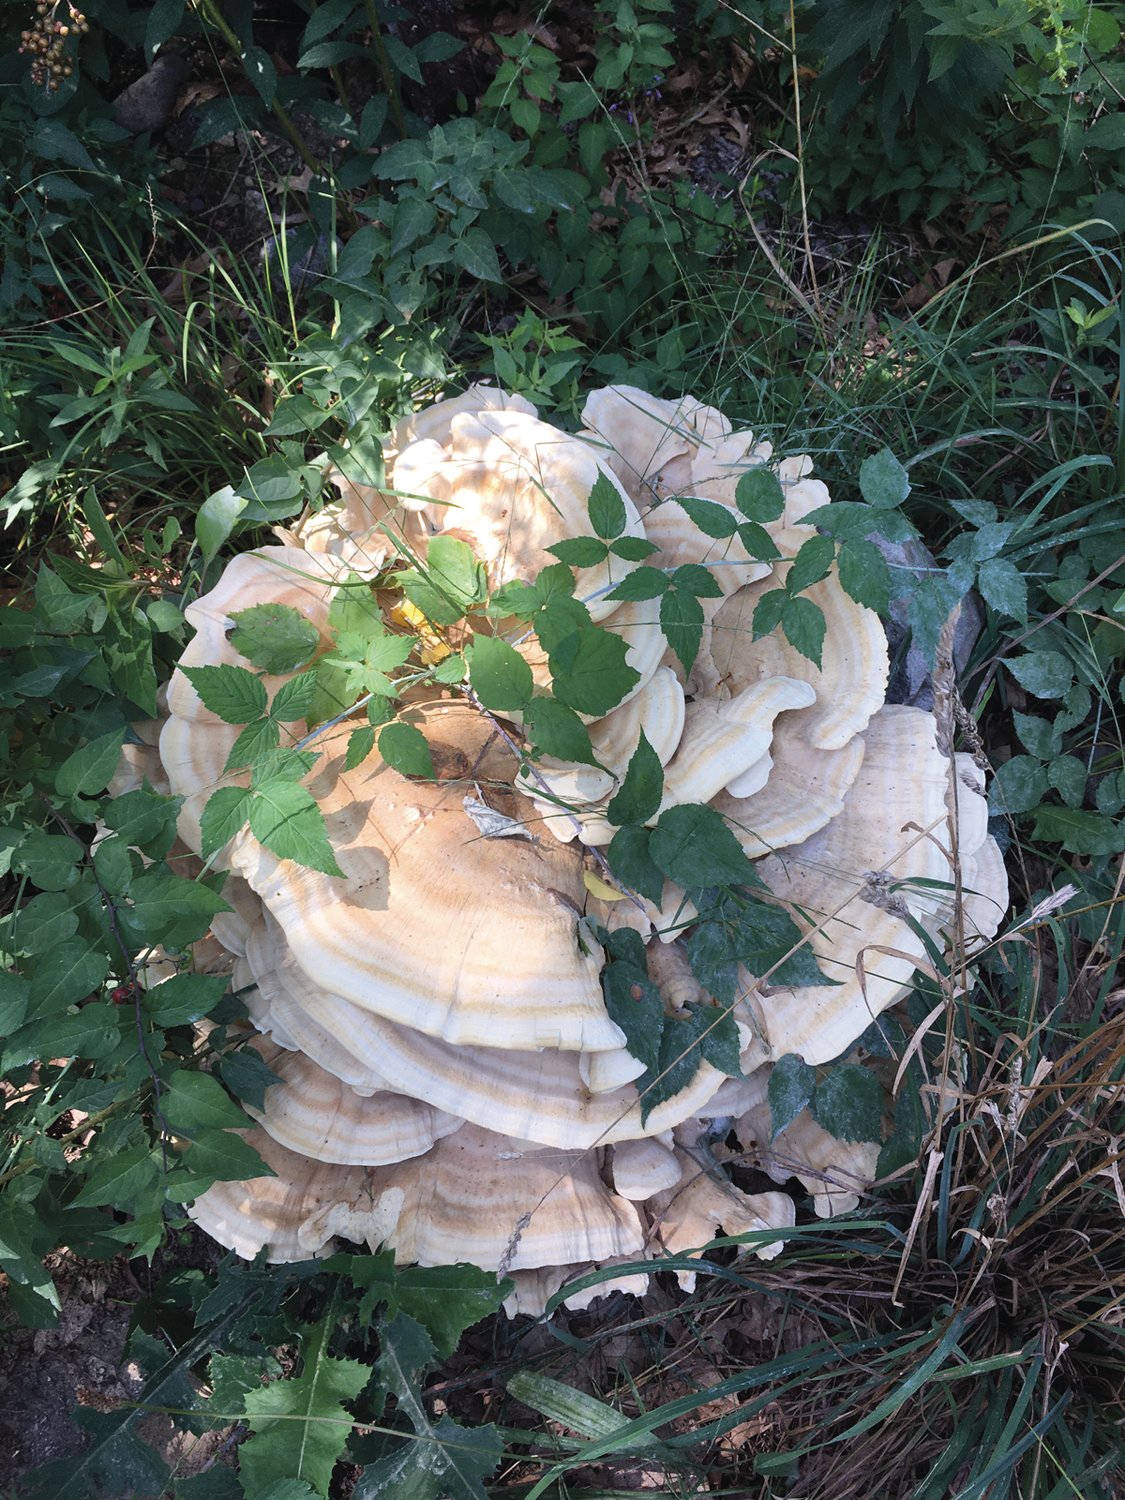 Berkeley’s Polypore mushroom